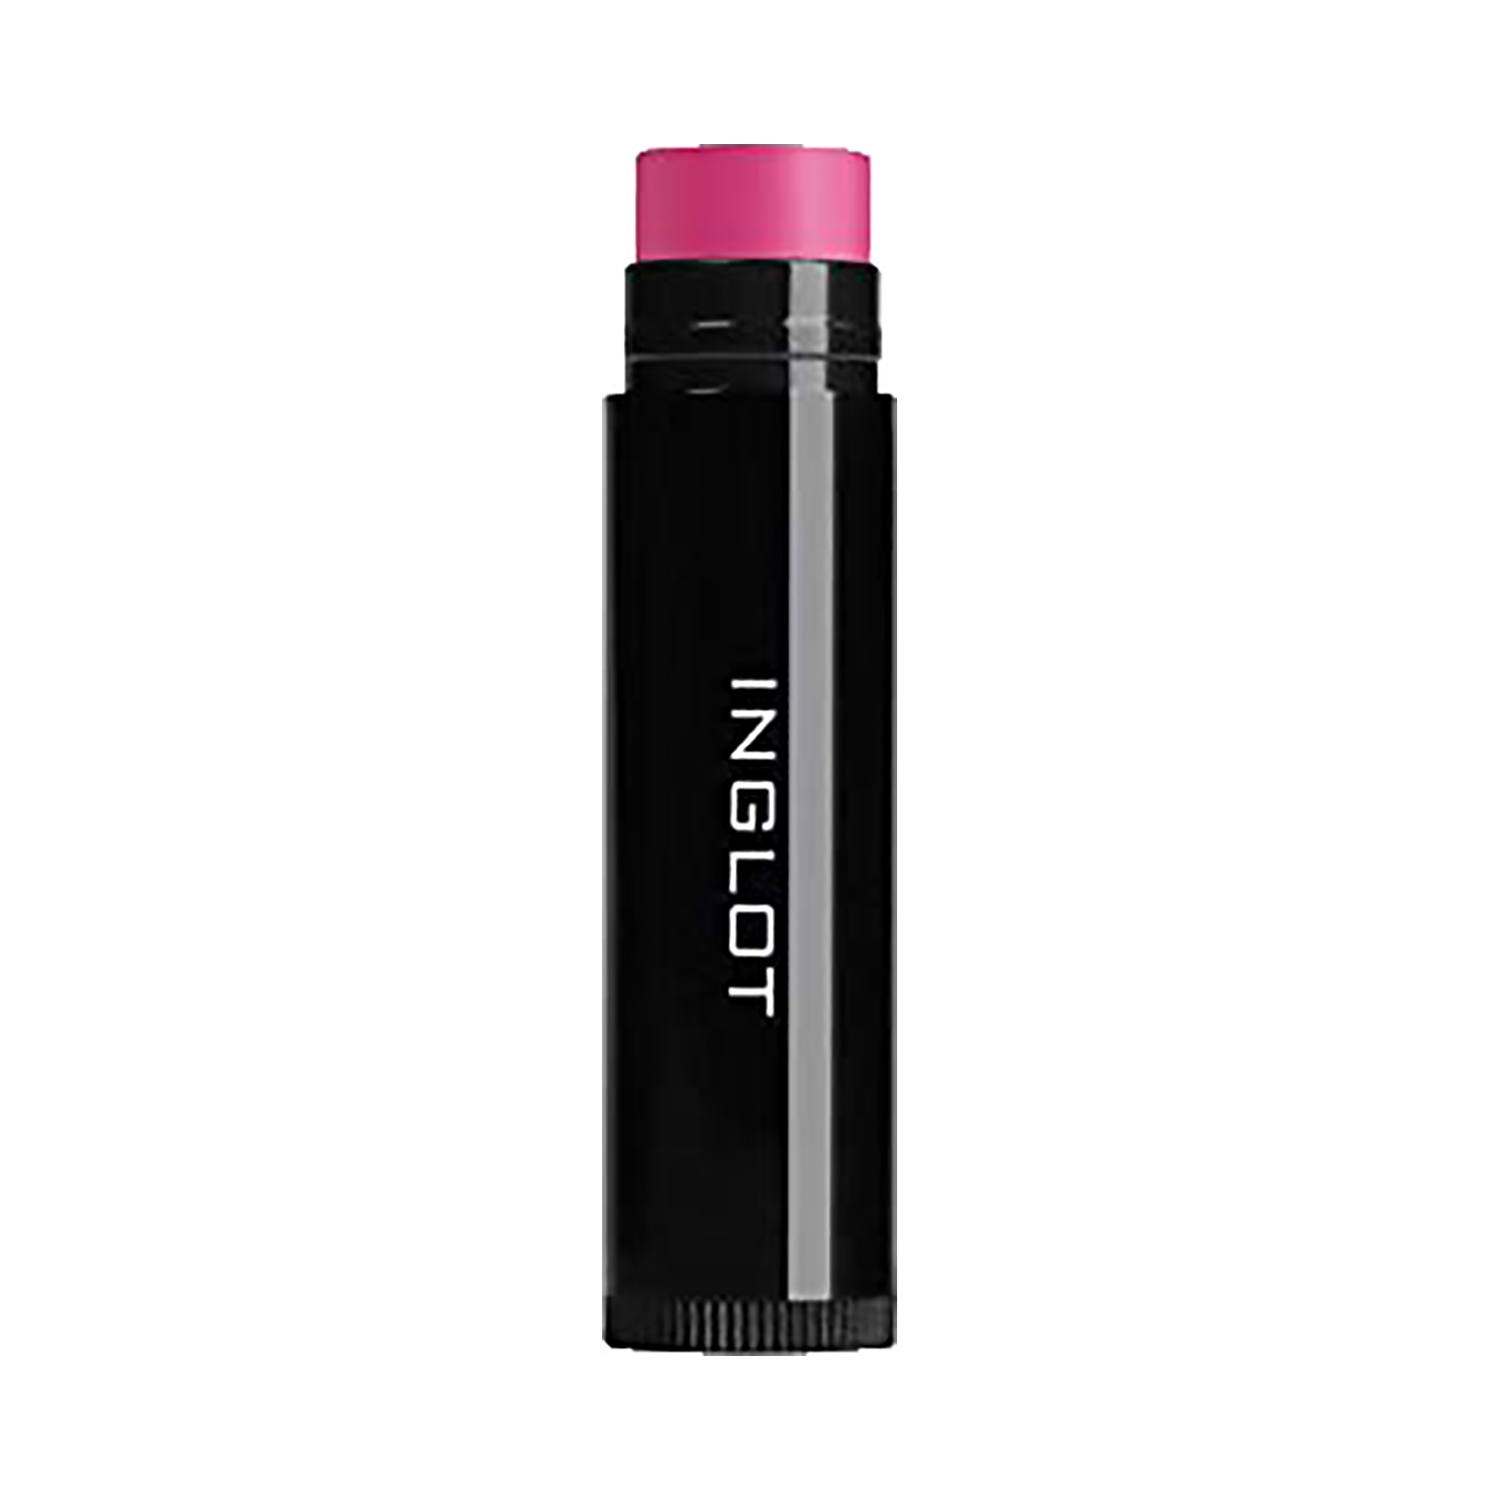 INGLOT | INGLOT Rich Care Lipstick - 02 Pink (5g)